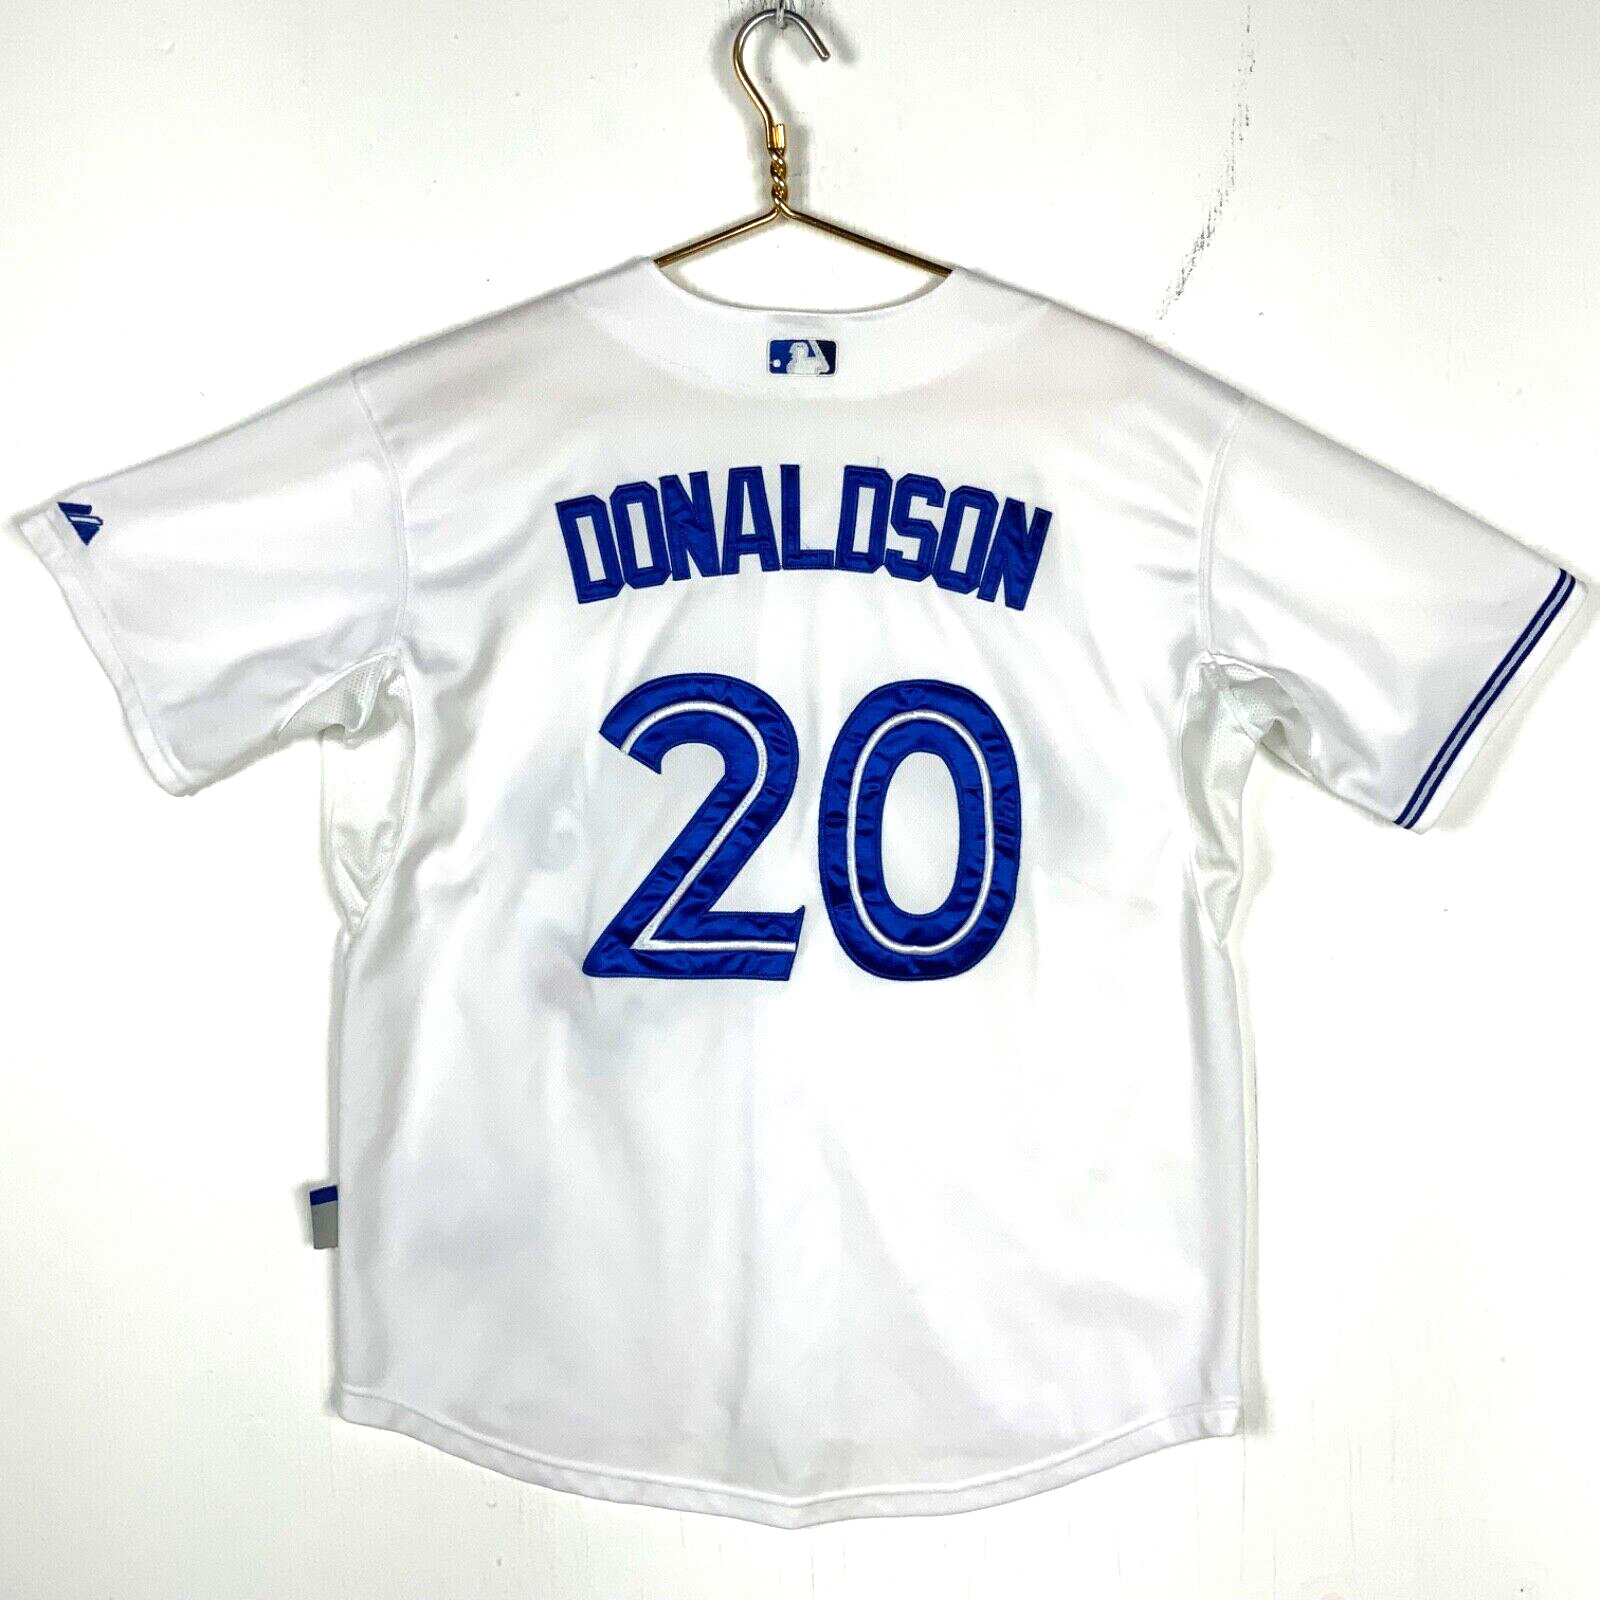 Josh Donaldson #20 Toronto Blue Jays Majestic Jersey 48 White Mlb